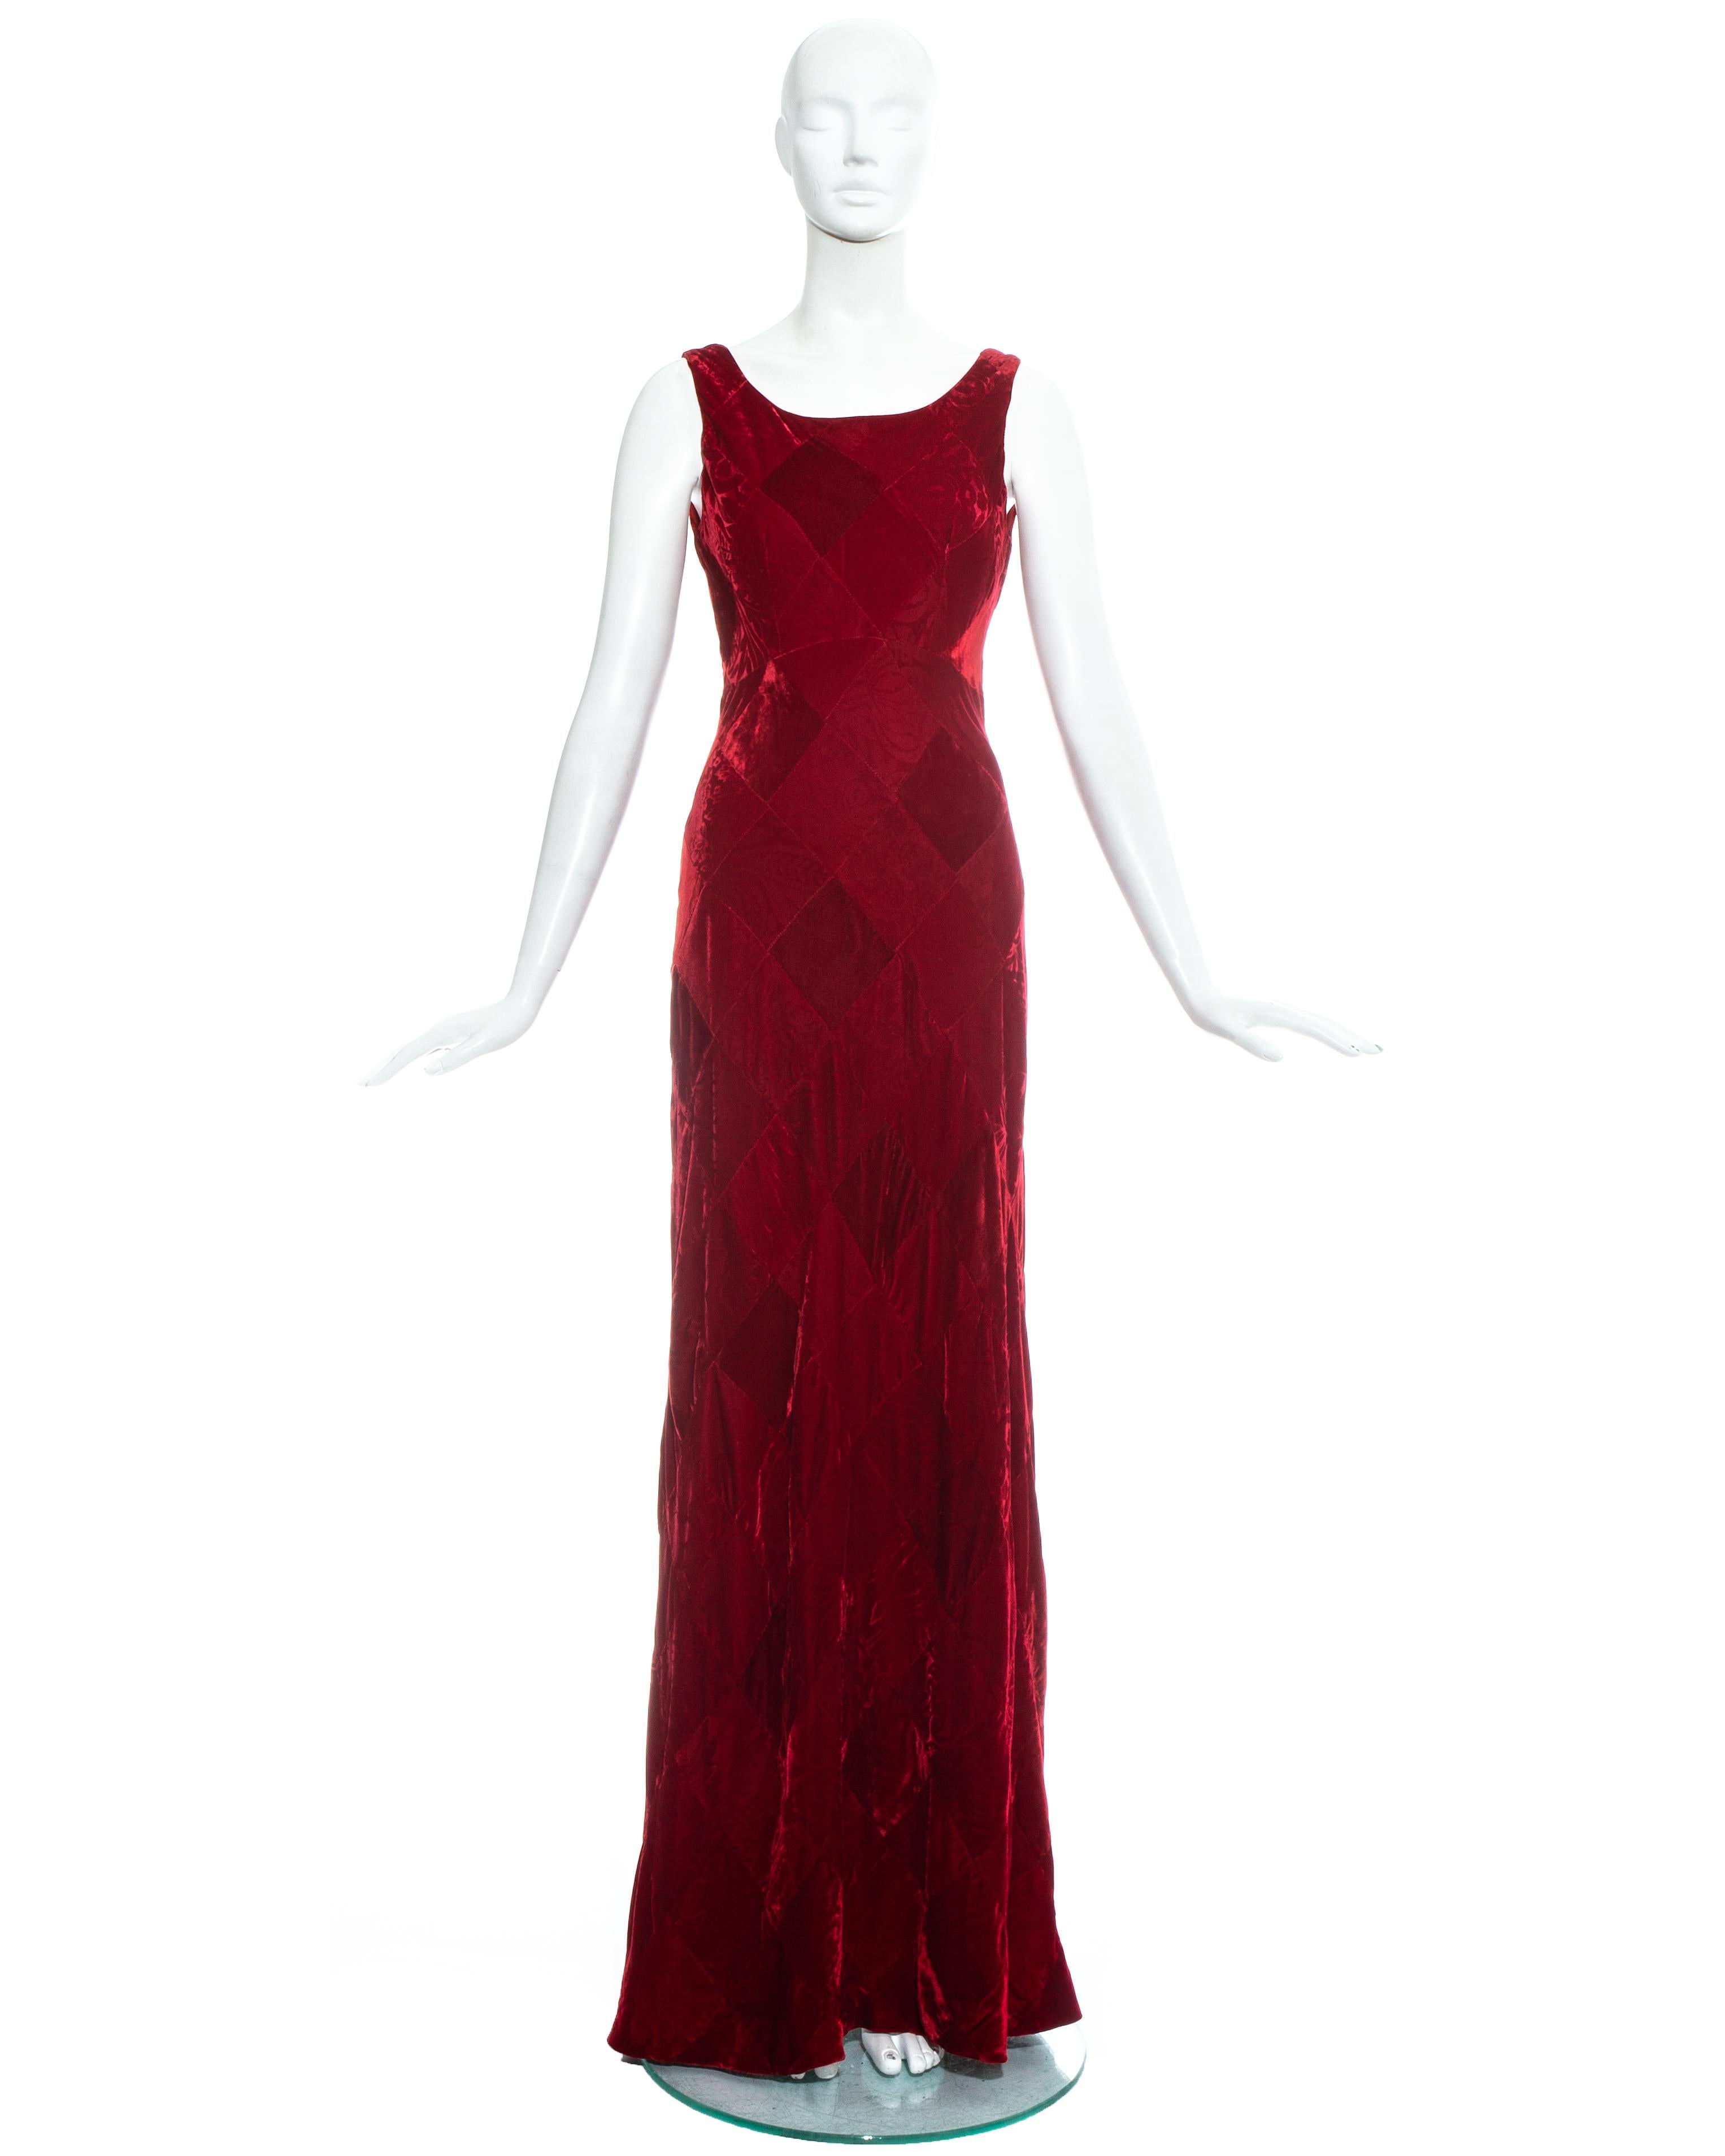 Dolce & Gabbana, red velvet diamond patchwork maxi dress.

Fall-Winter 1993